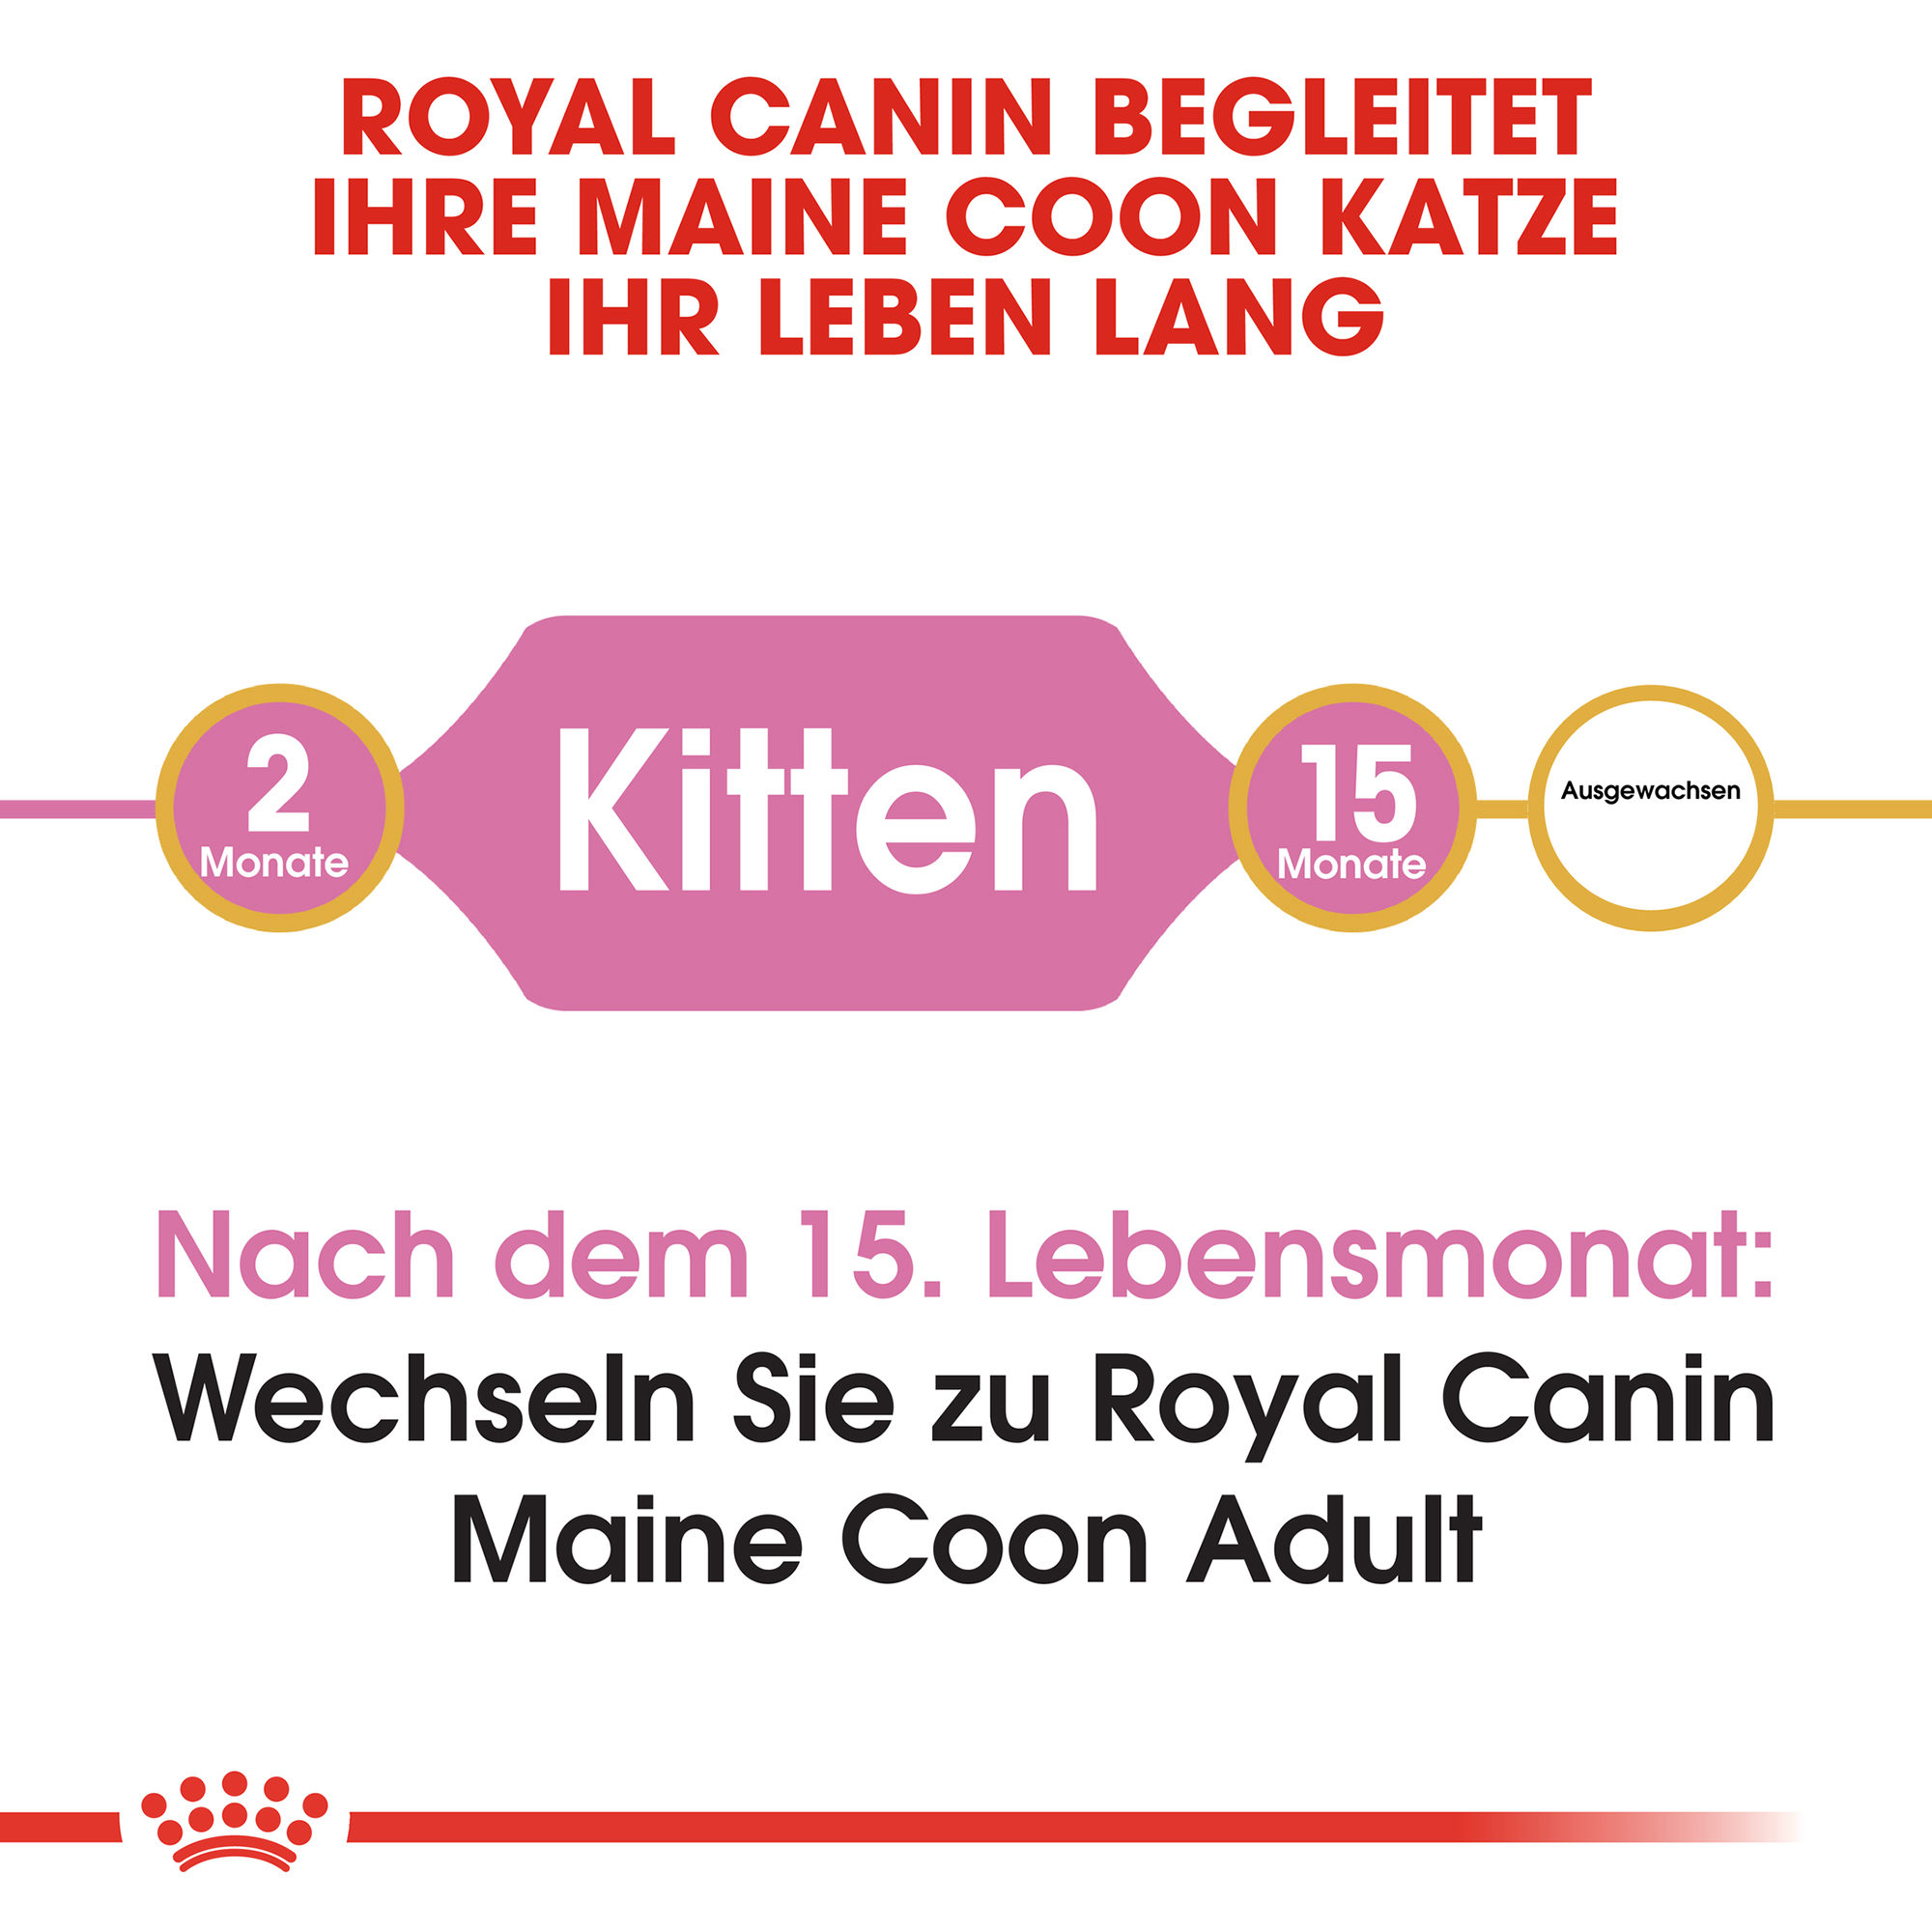 Royal Canin Maine Coon Kitten Katzenfutter - 2 kg 5